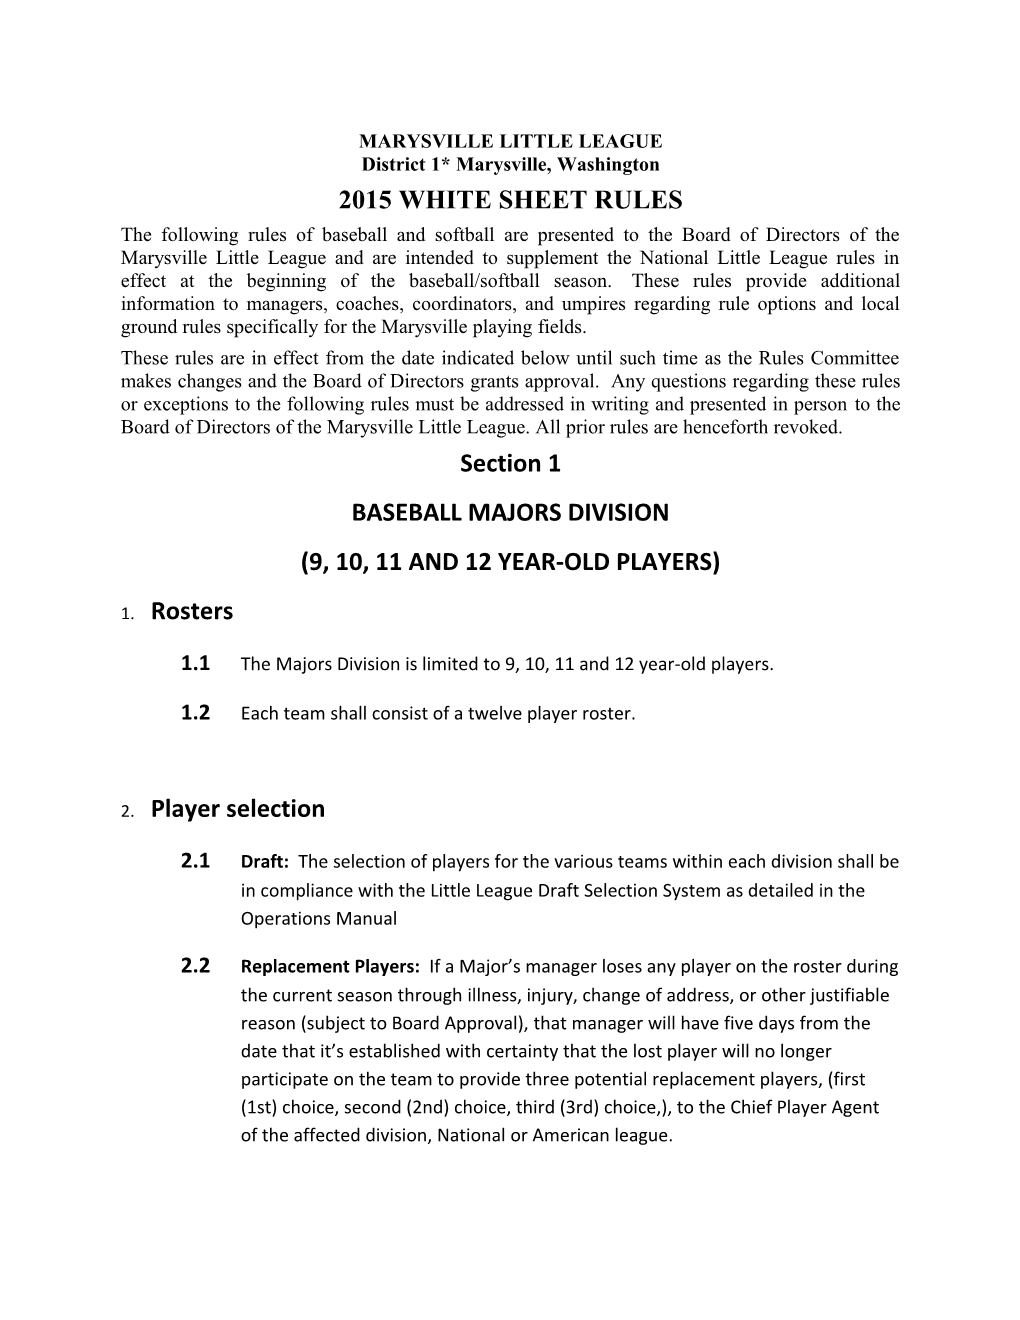 2015 White Sheet Rules